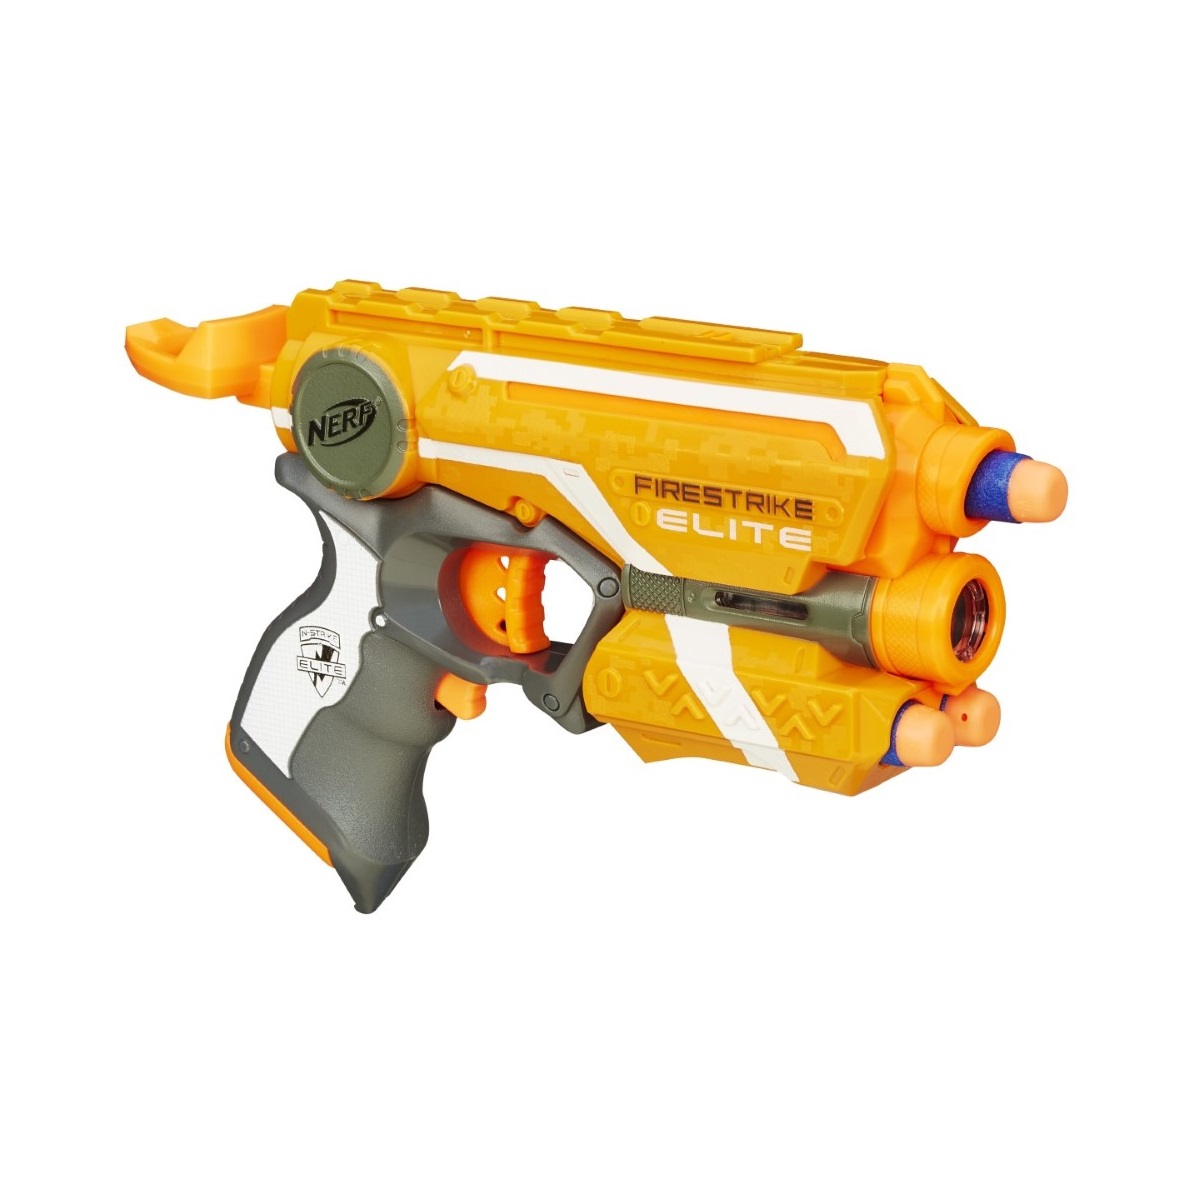 Nerf N Strike Elite Firestrike Foam Blaster